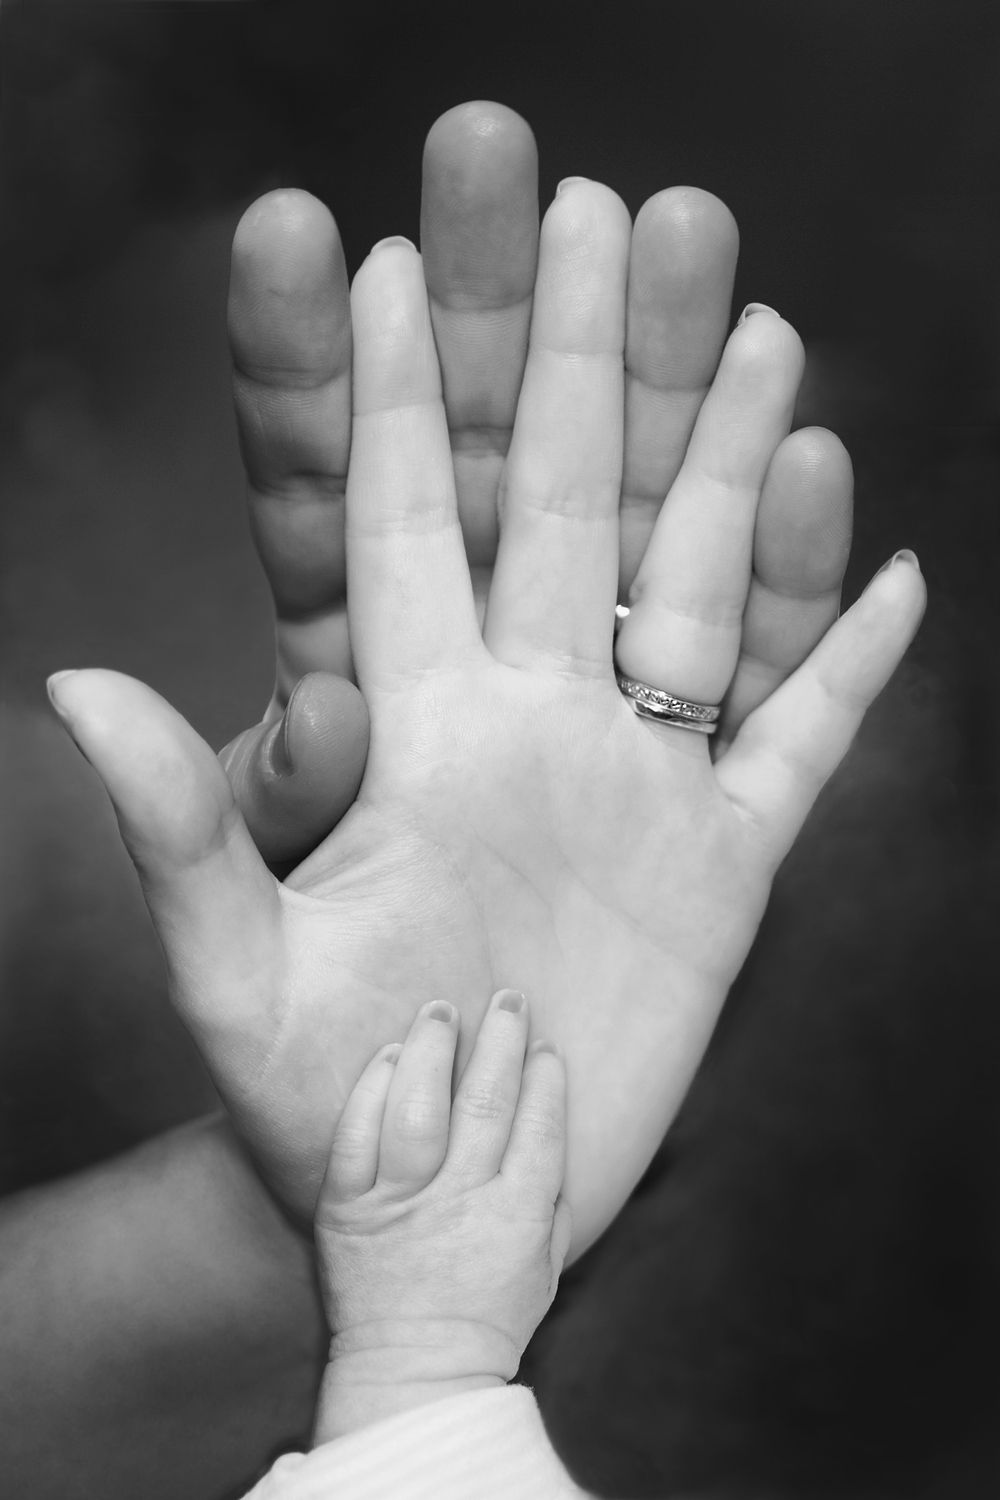 Free family's hand image